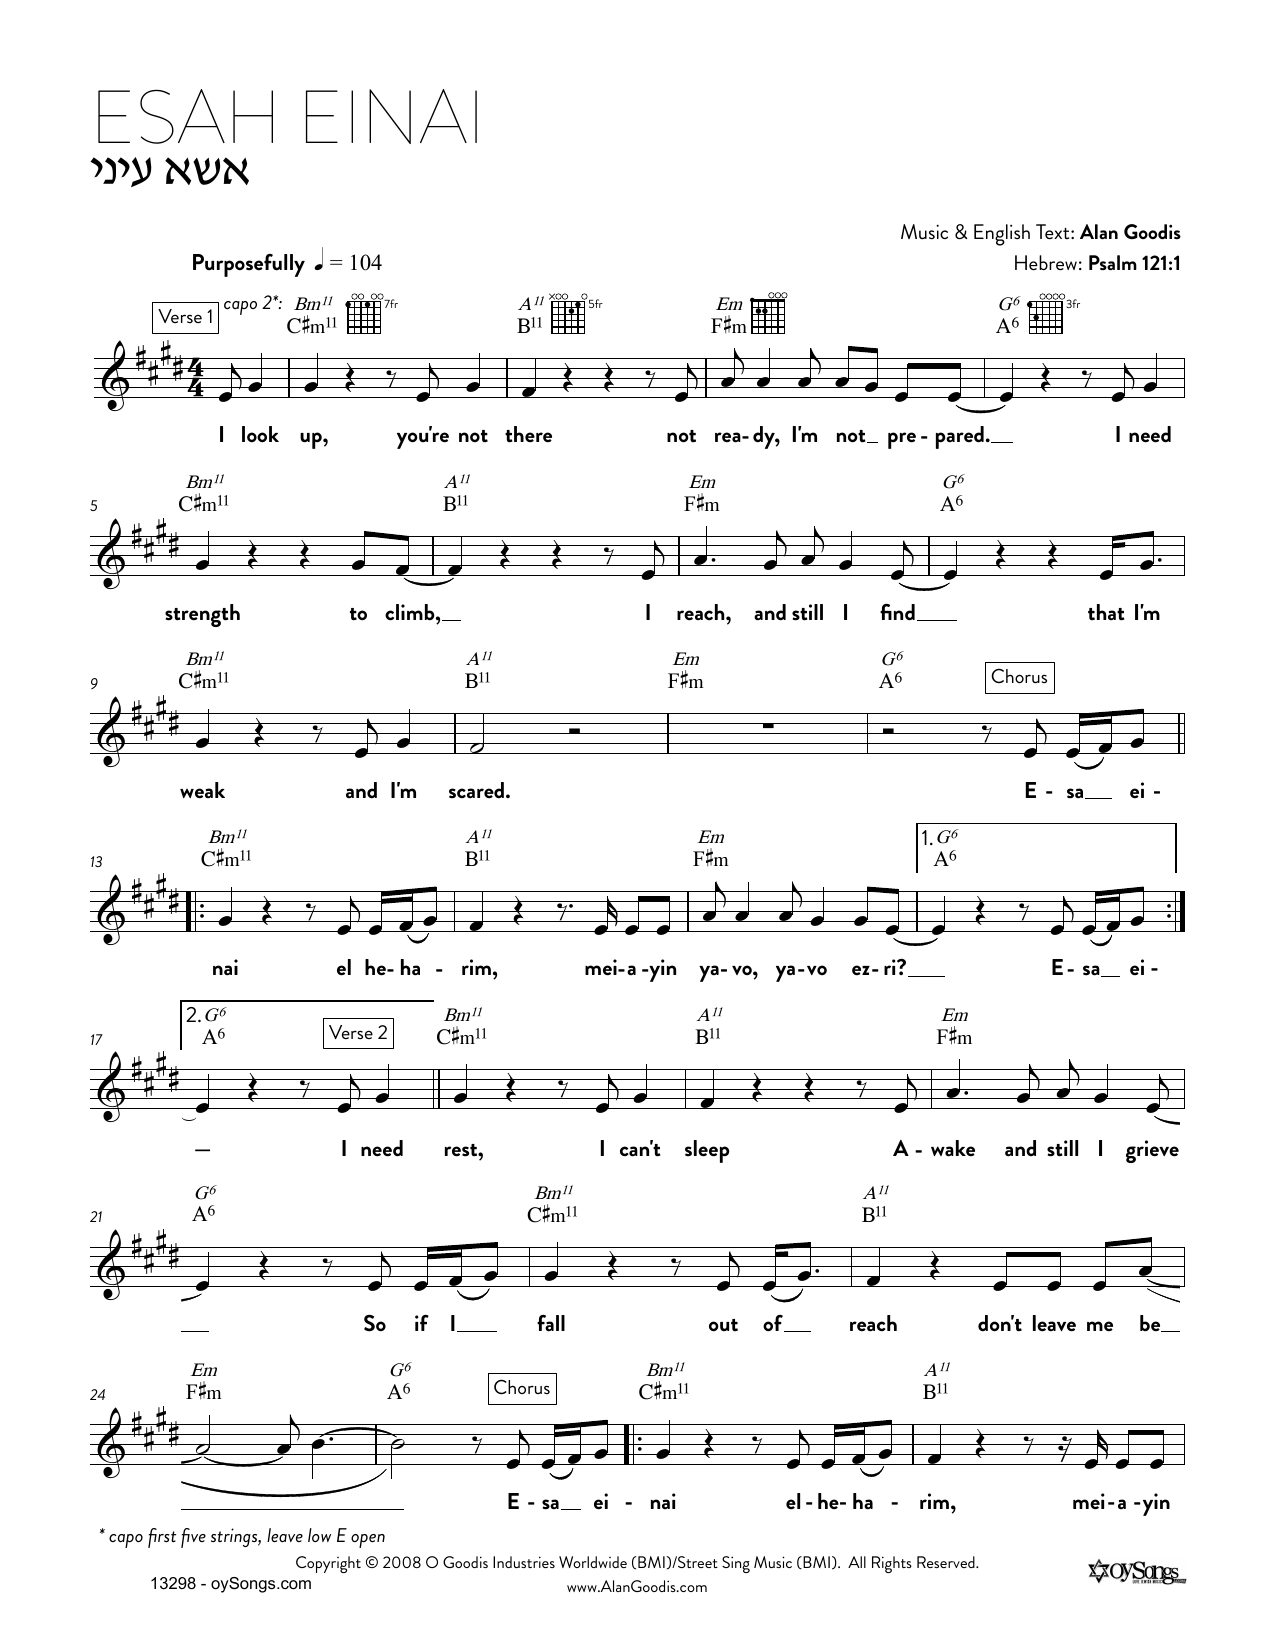 Alan Goodis Esah Einai sheet music notes and chords arranged for Lead Sheet / Fake Book